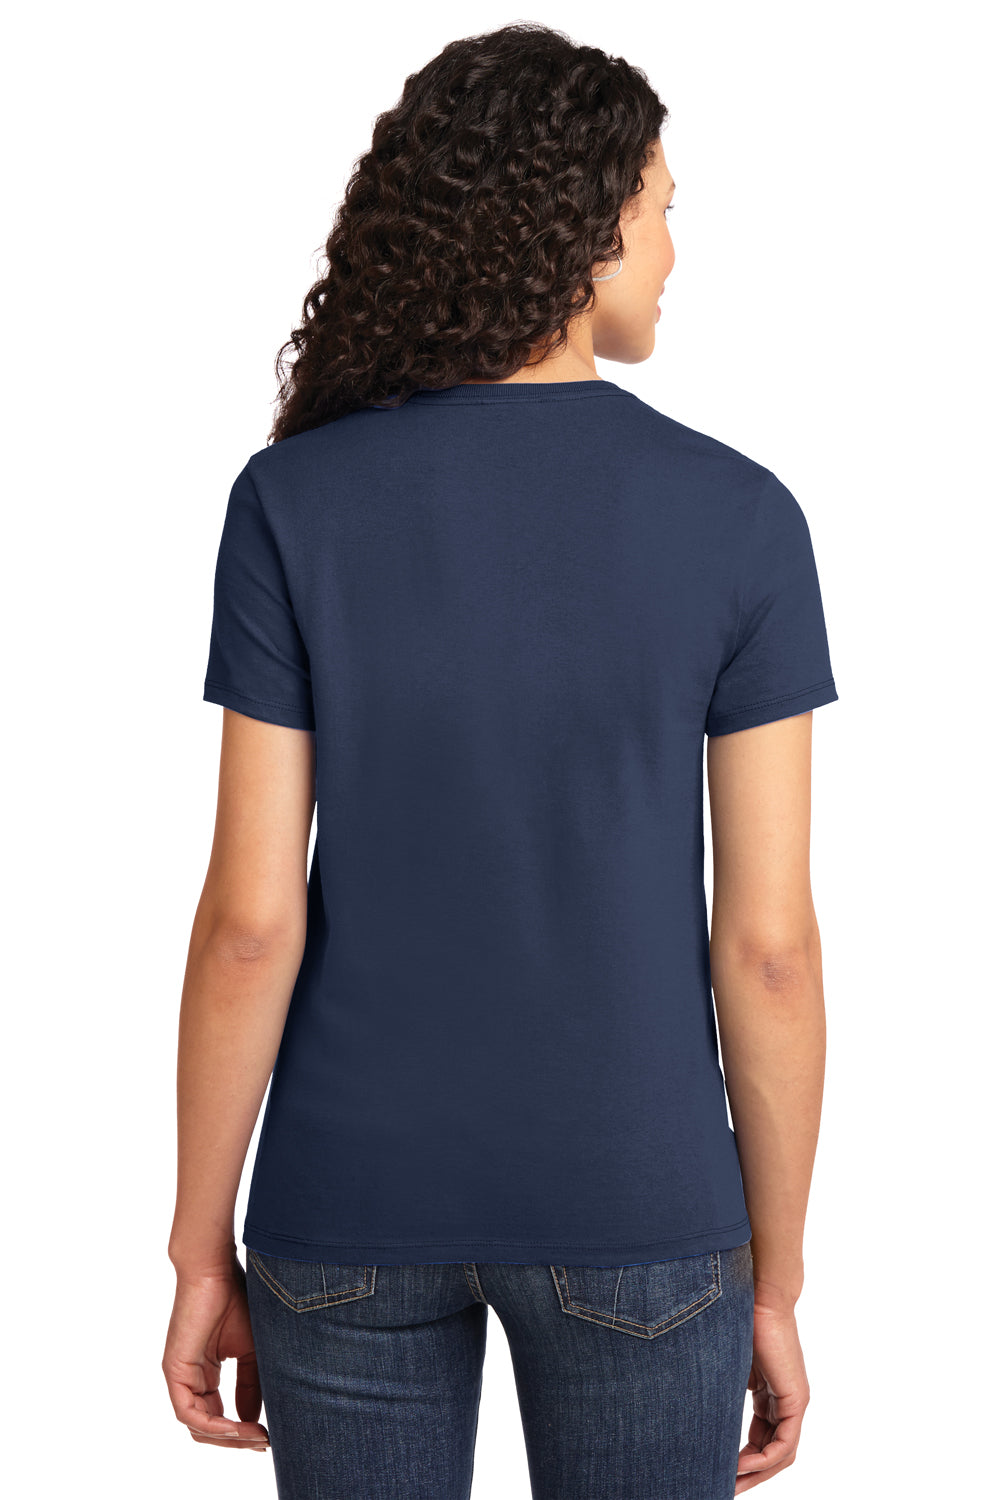 Port & Company LPC61 Womens Essential Short Sleeve Crewneck T-Shirt Navy Blue Back